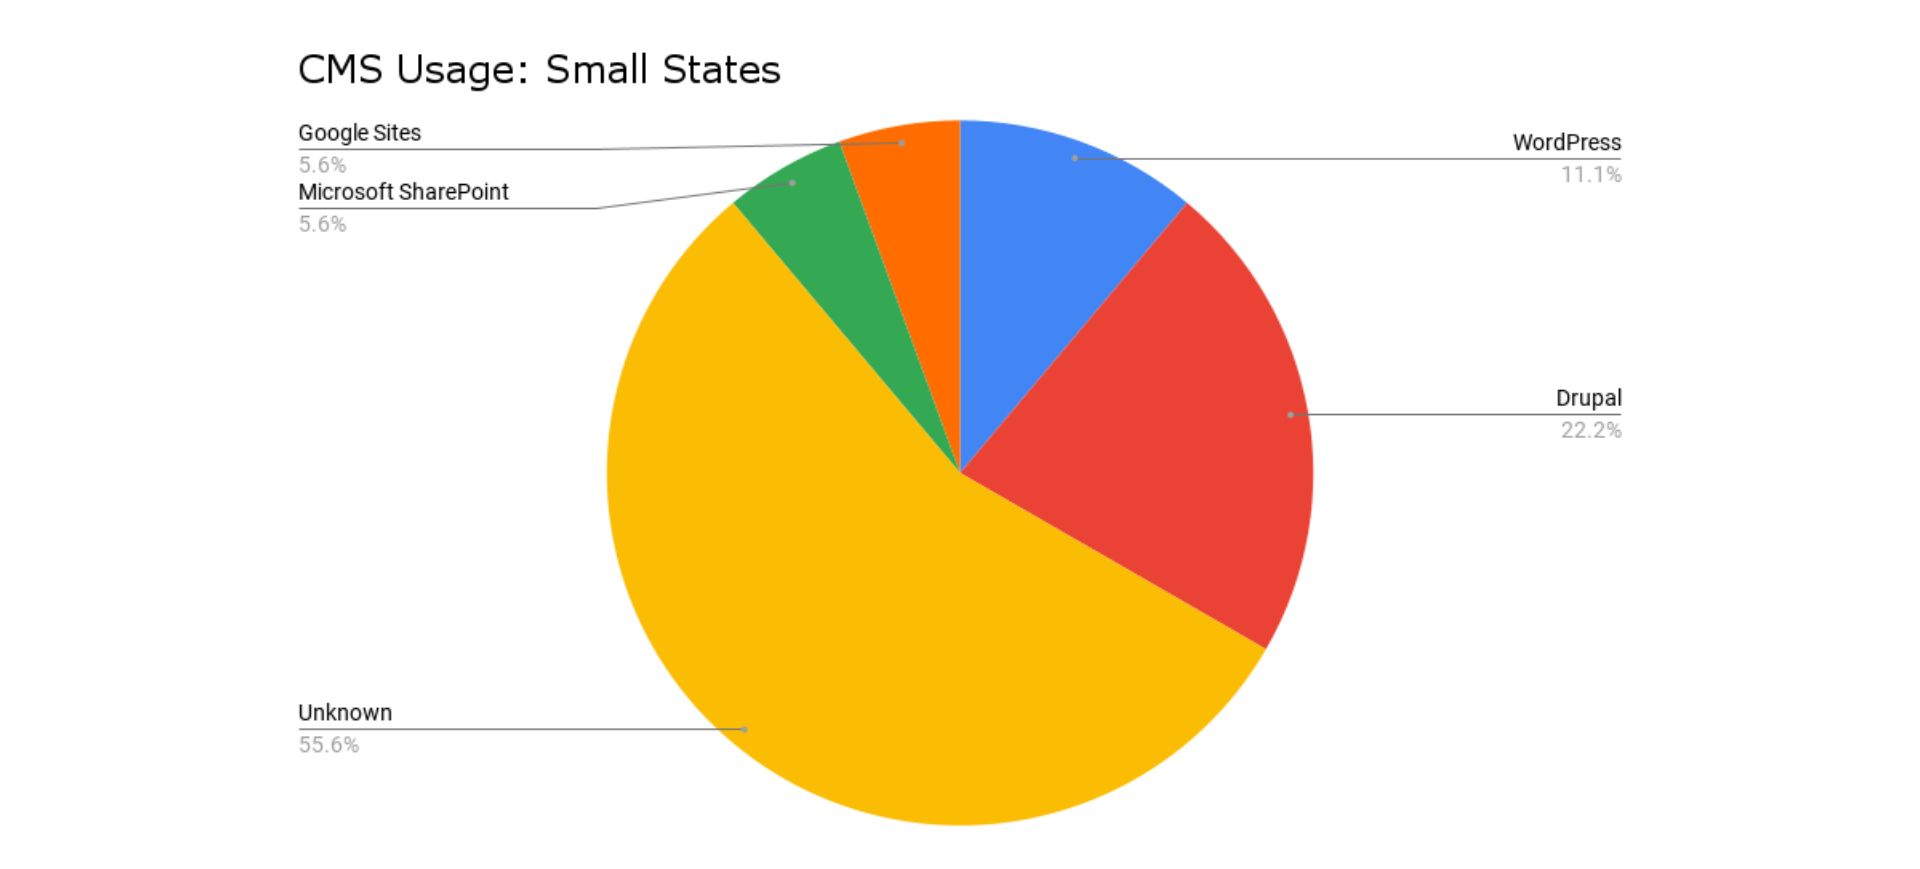 cms usage: small states